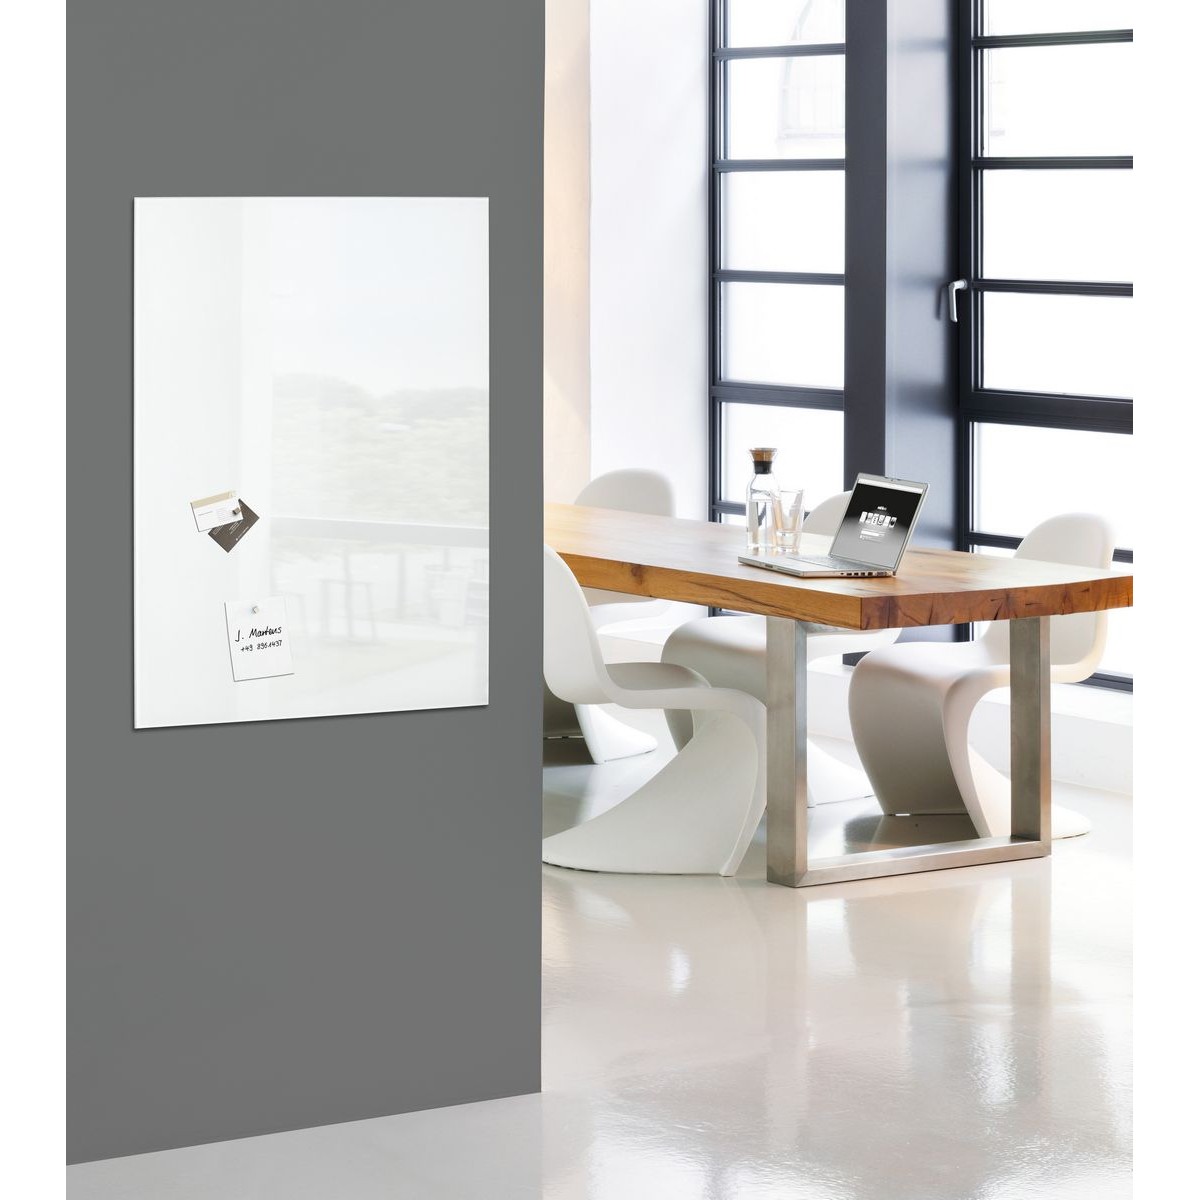 GL131 - Sigel - Magnetic Glass Board - Super White - 78 x 48 x 1,5 cm